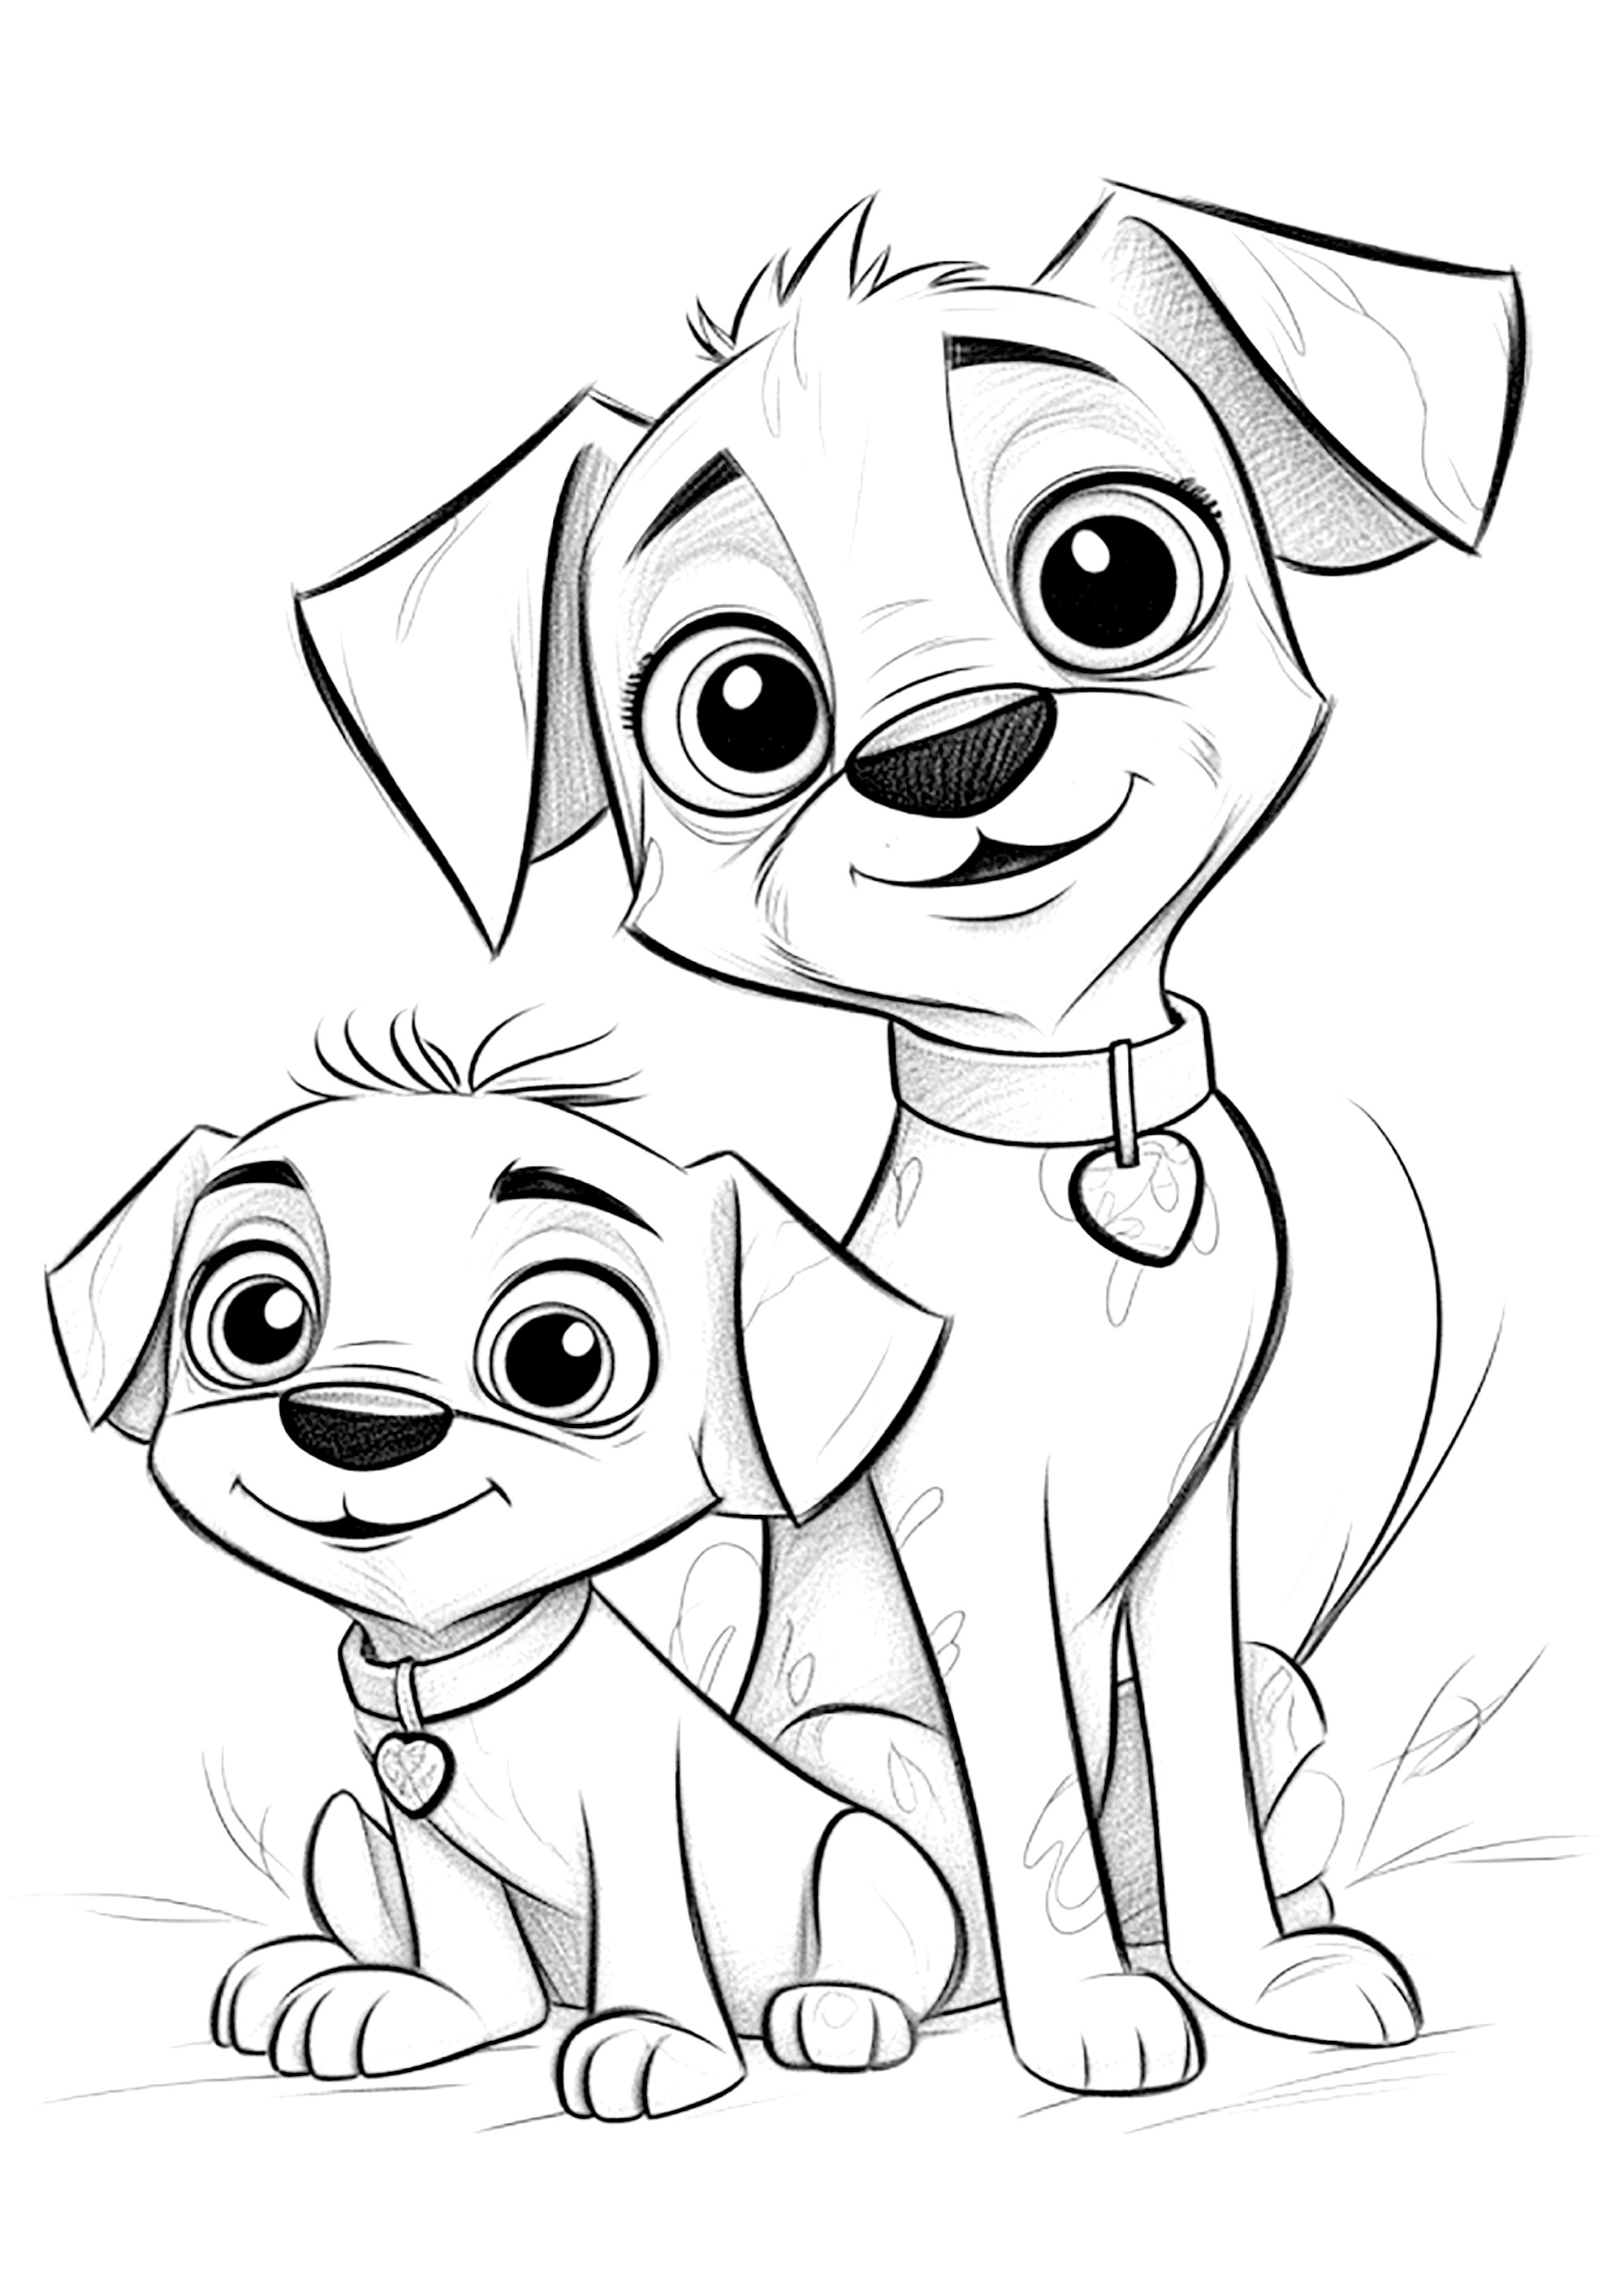 Two smiling dogs (Disney - Pixar style)